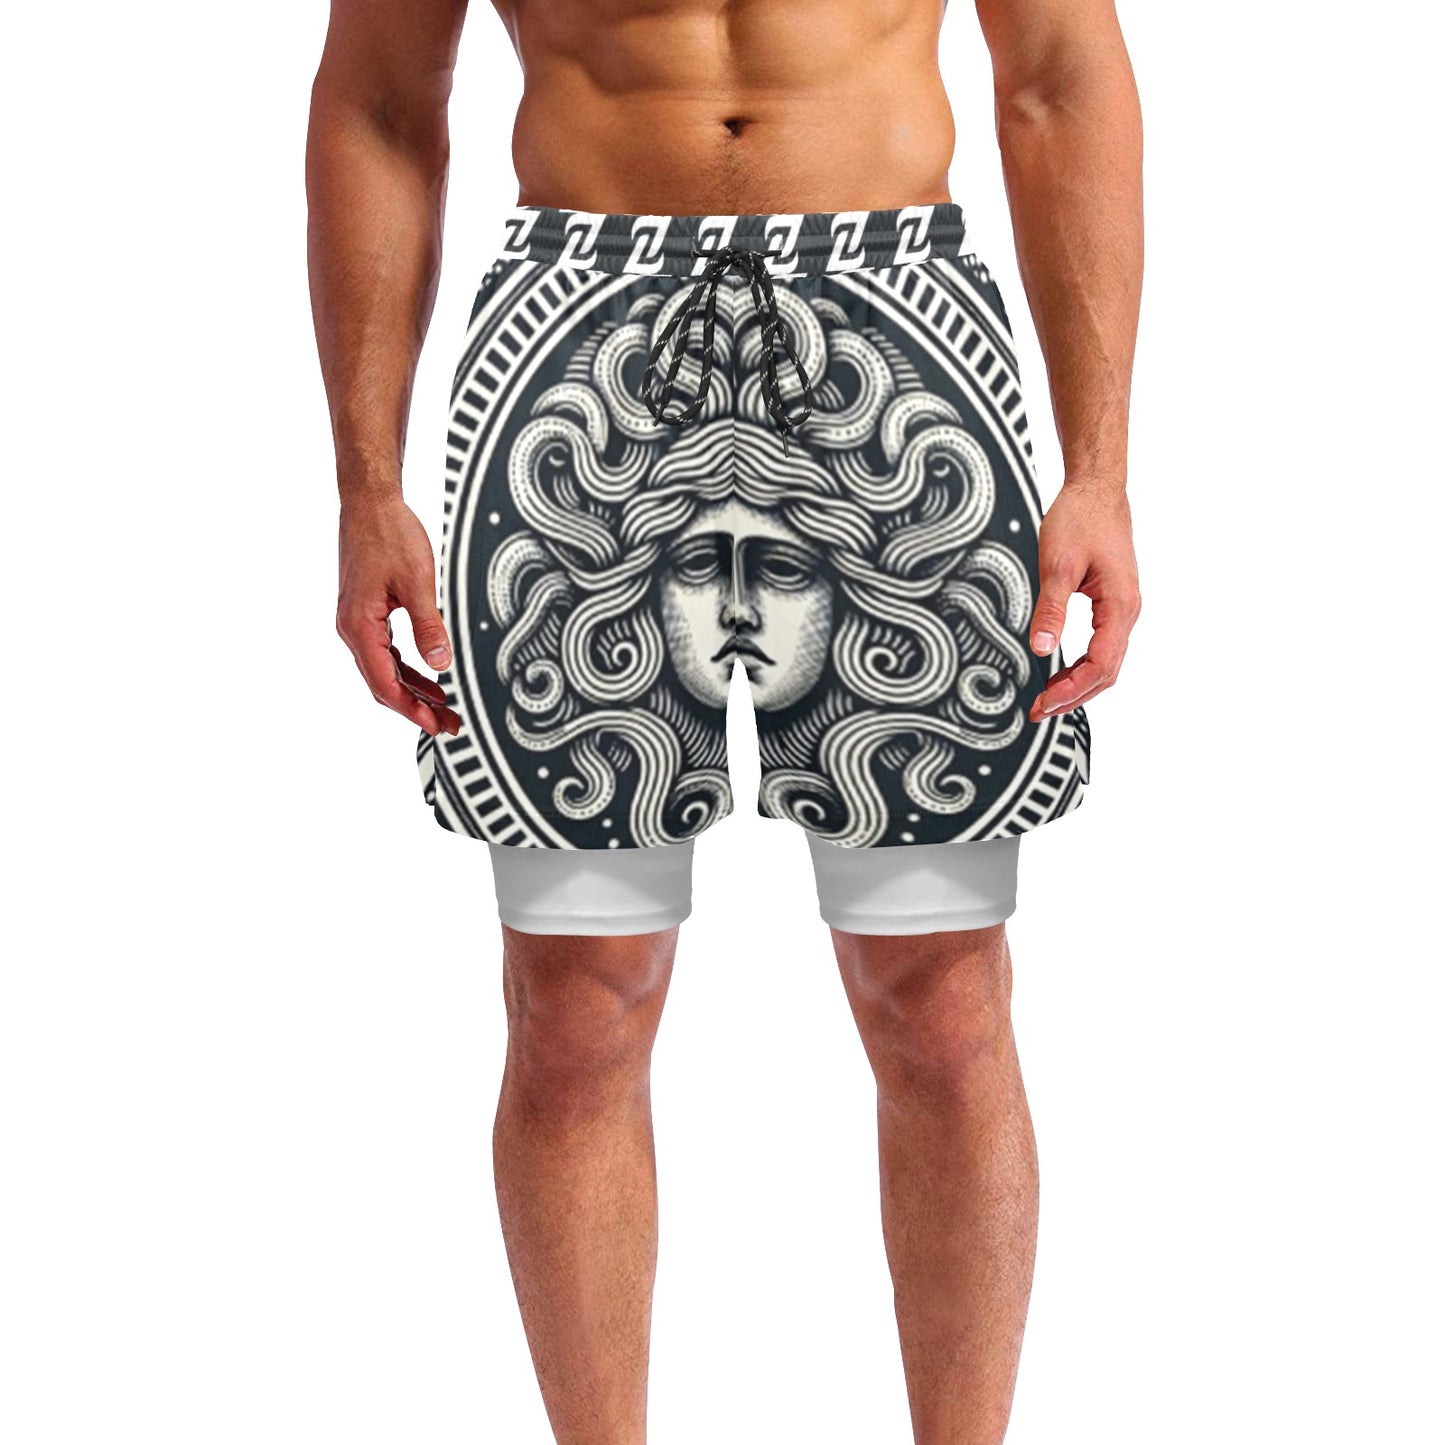 Zen Shorts with Liner - Medusa